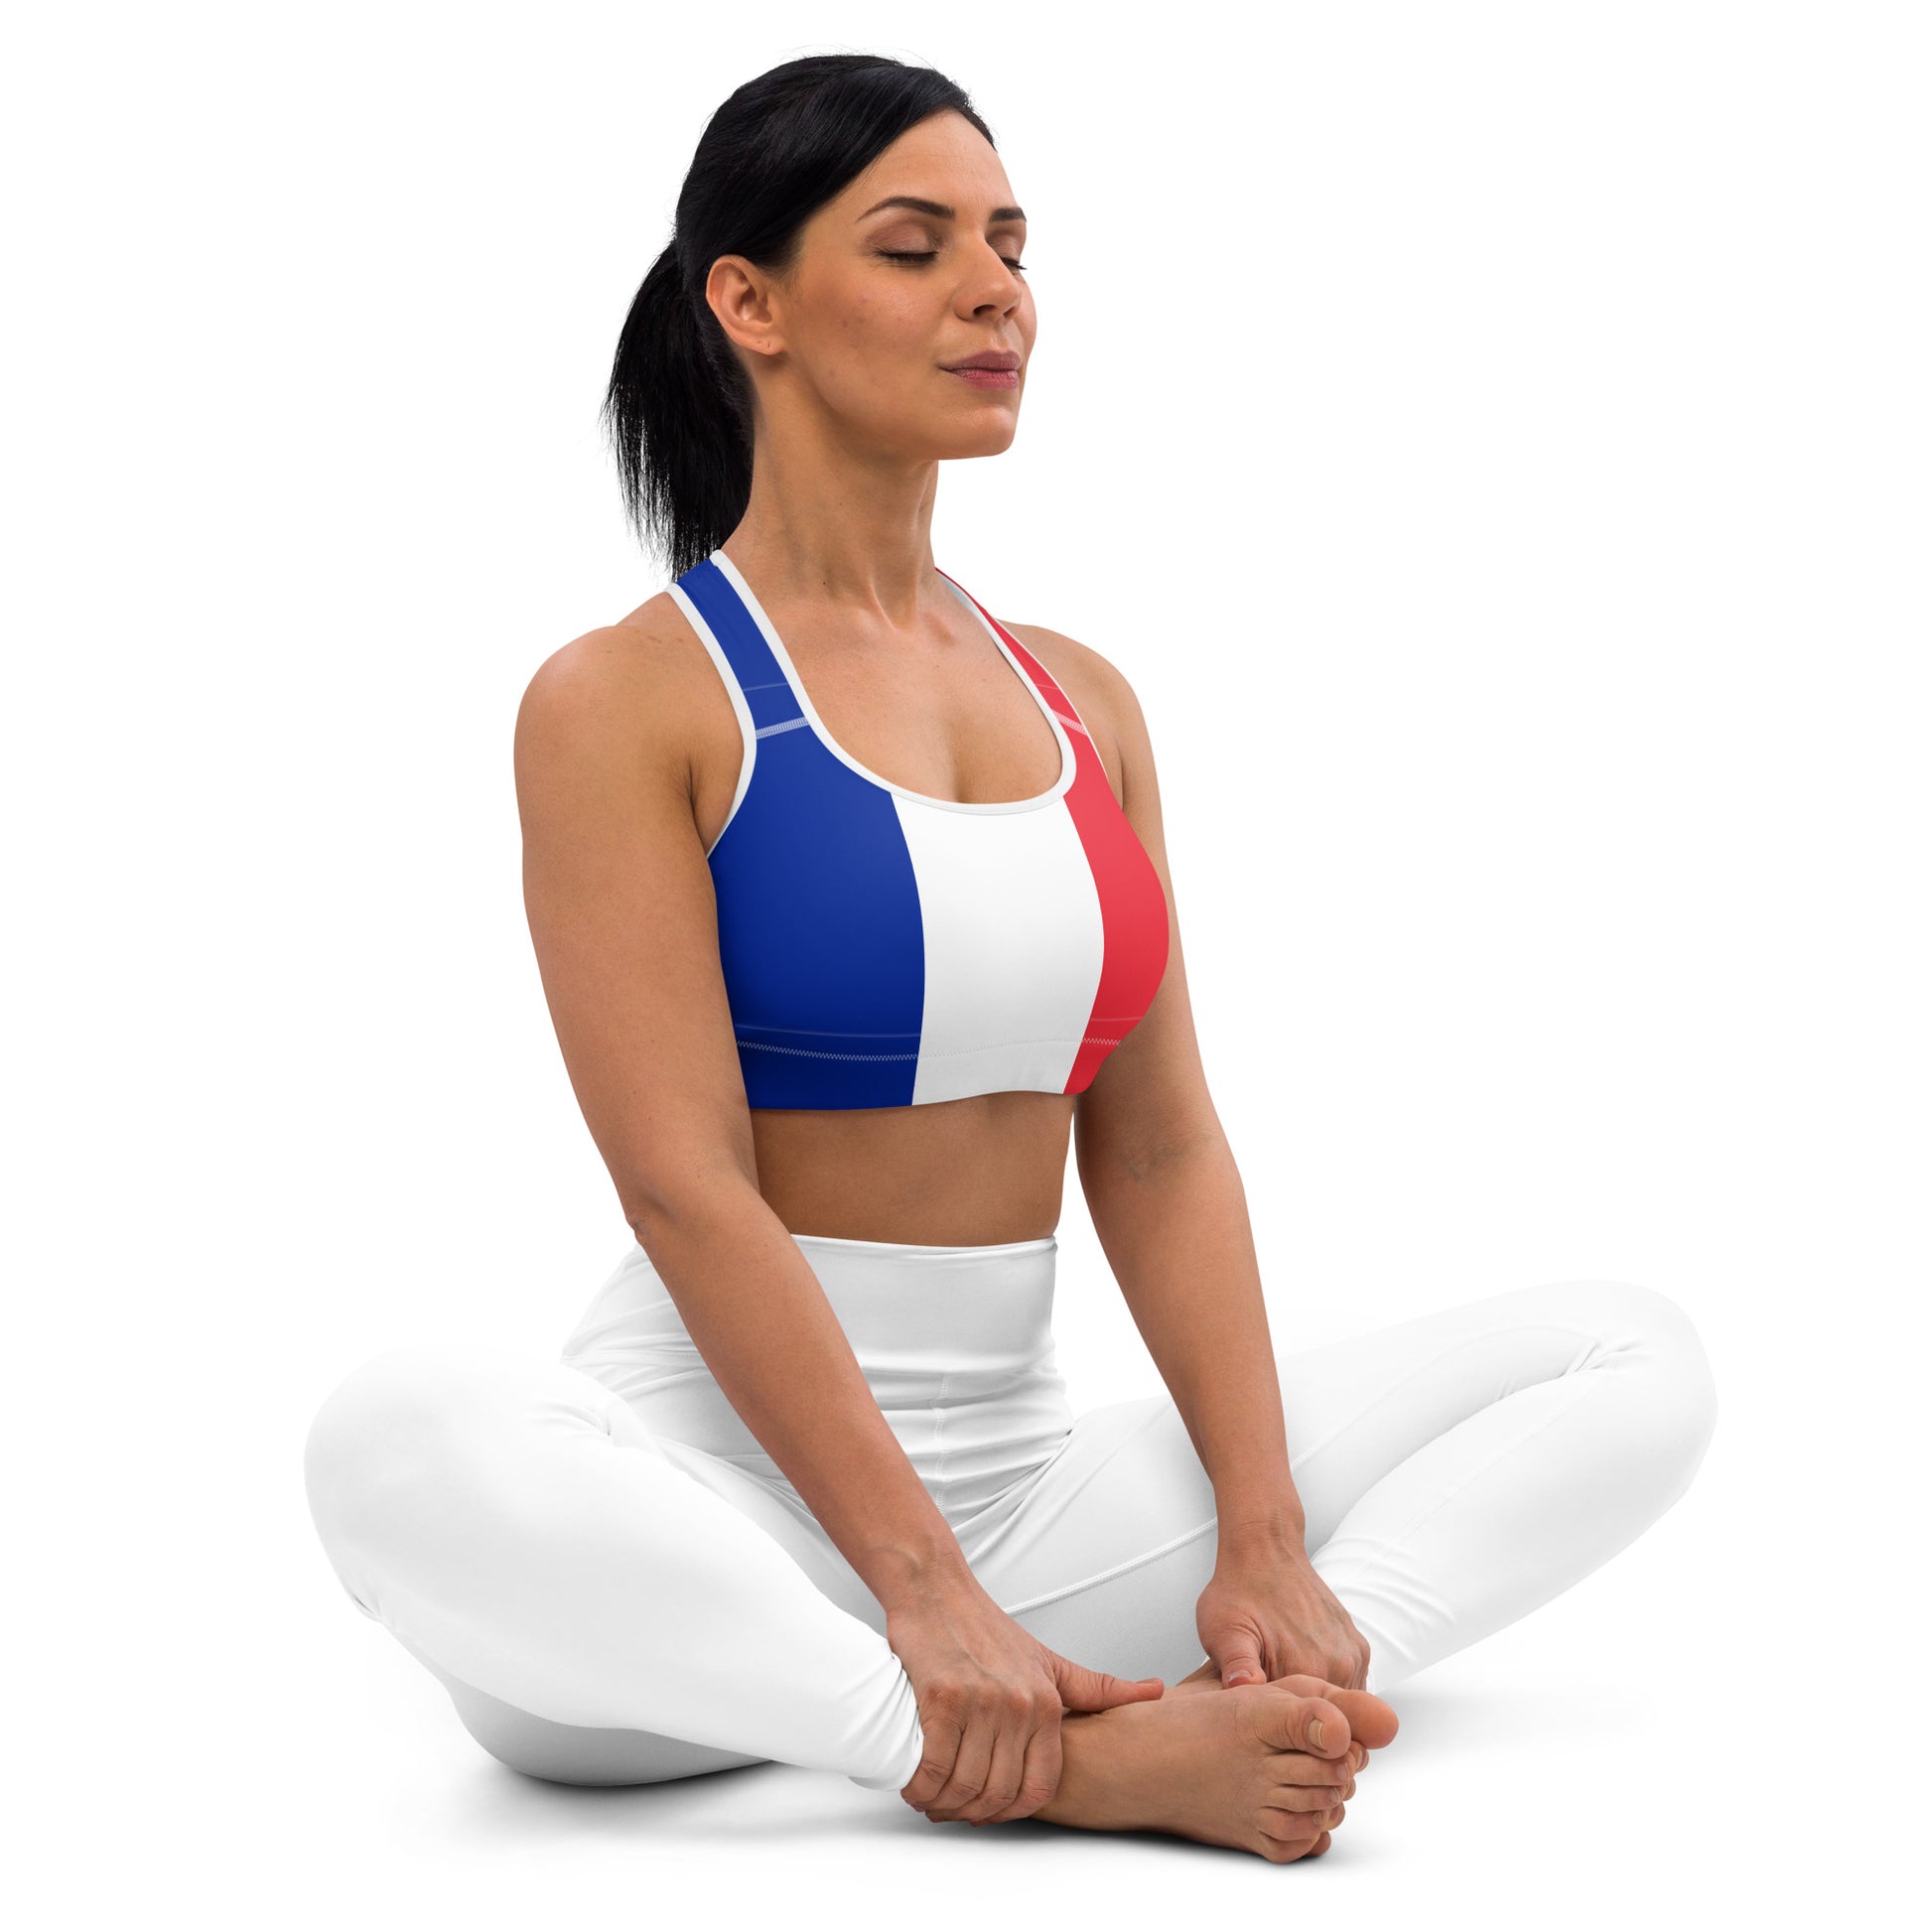 yoga sports bra with france flag printed